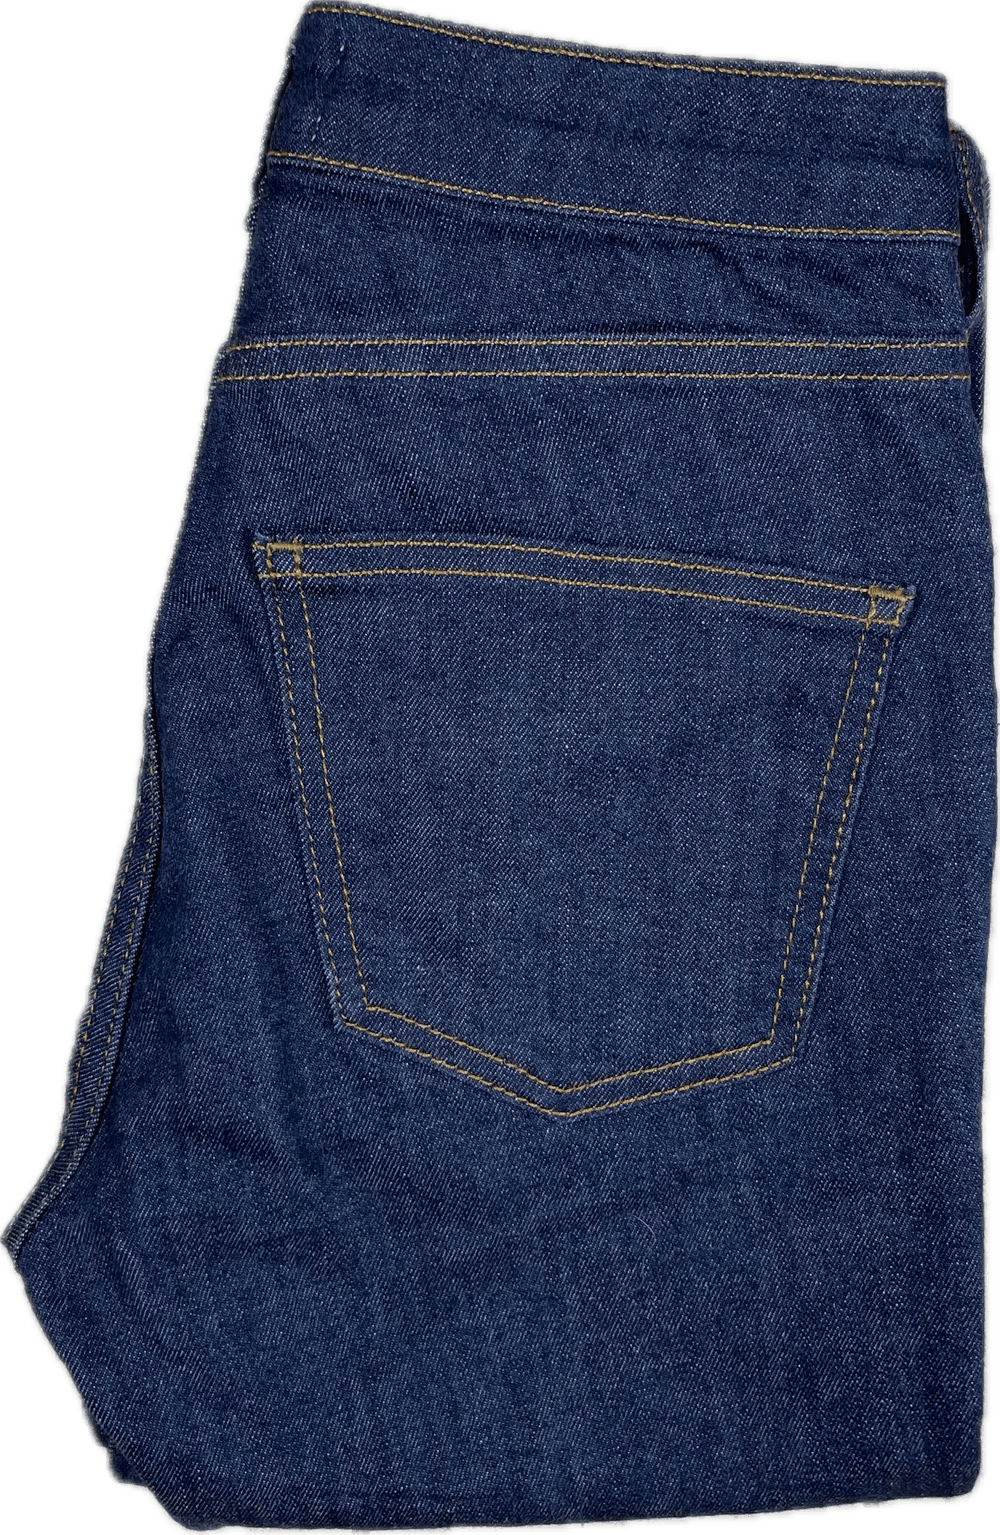 Acne Studios Ladies 'Pin Raw Reform' Slim Fit Jeans - Size 28 - Jean Pool